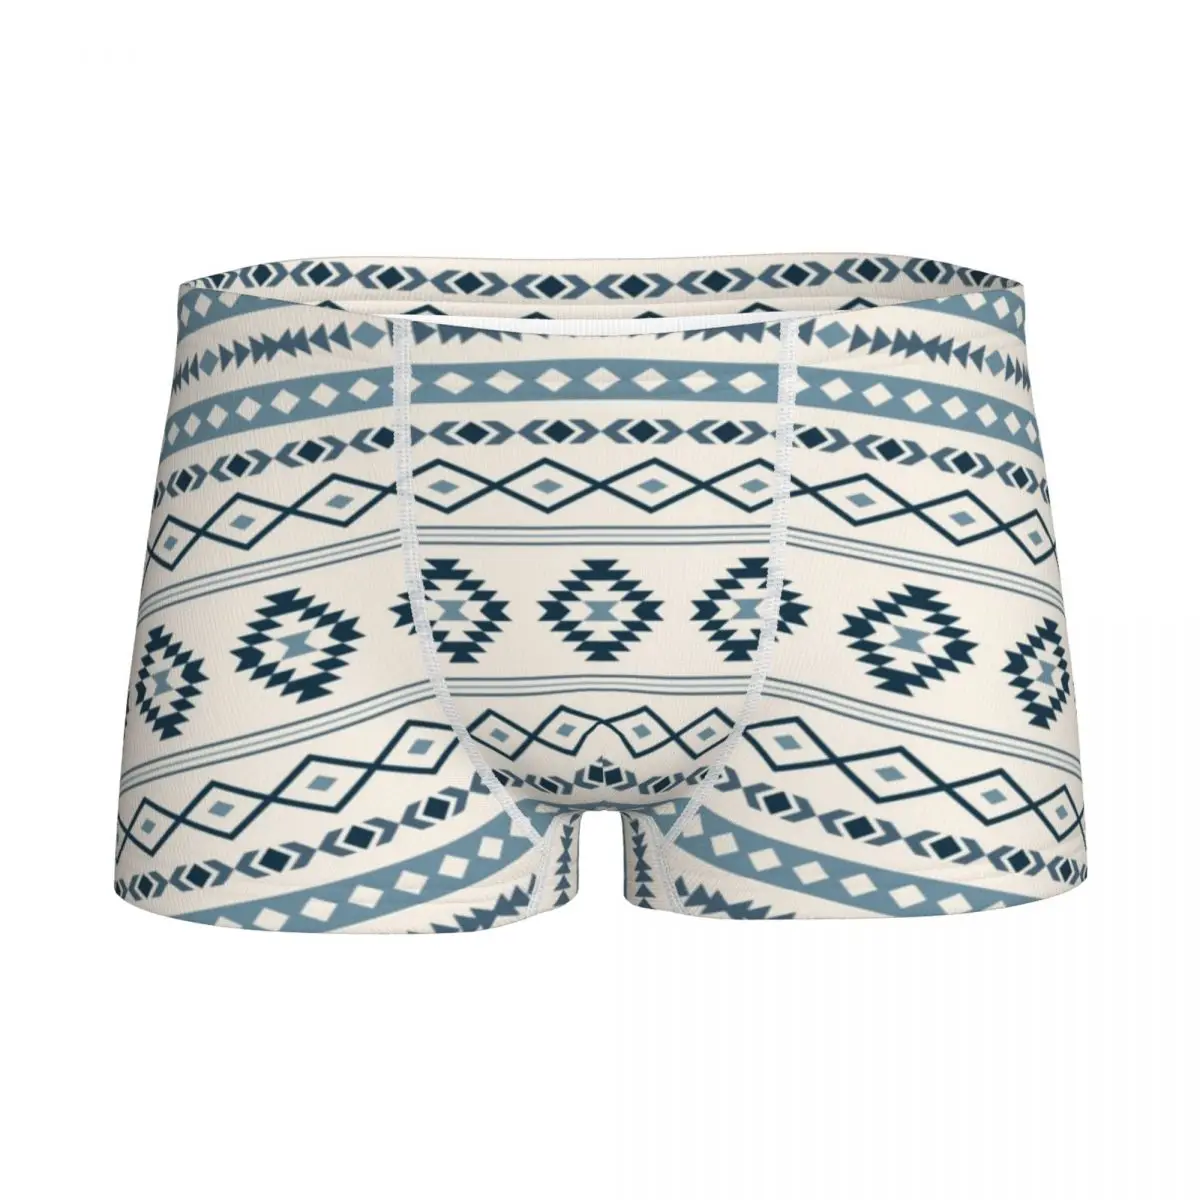 Children's Boys Underwear Bohemian Pattern Youth Panties Boxers Aztec Blues on Cream Mixed Motifs Teenage Cotton Underpants